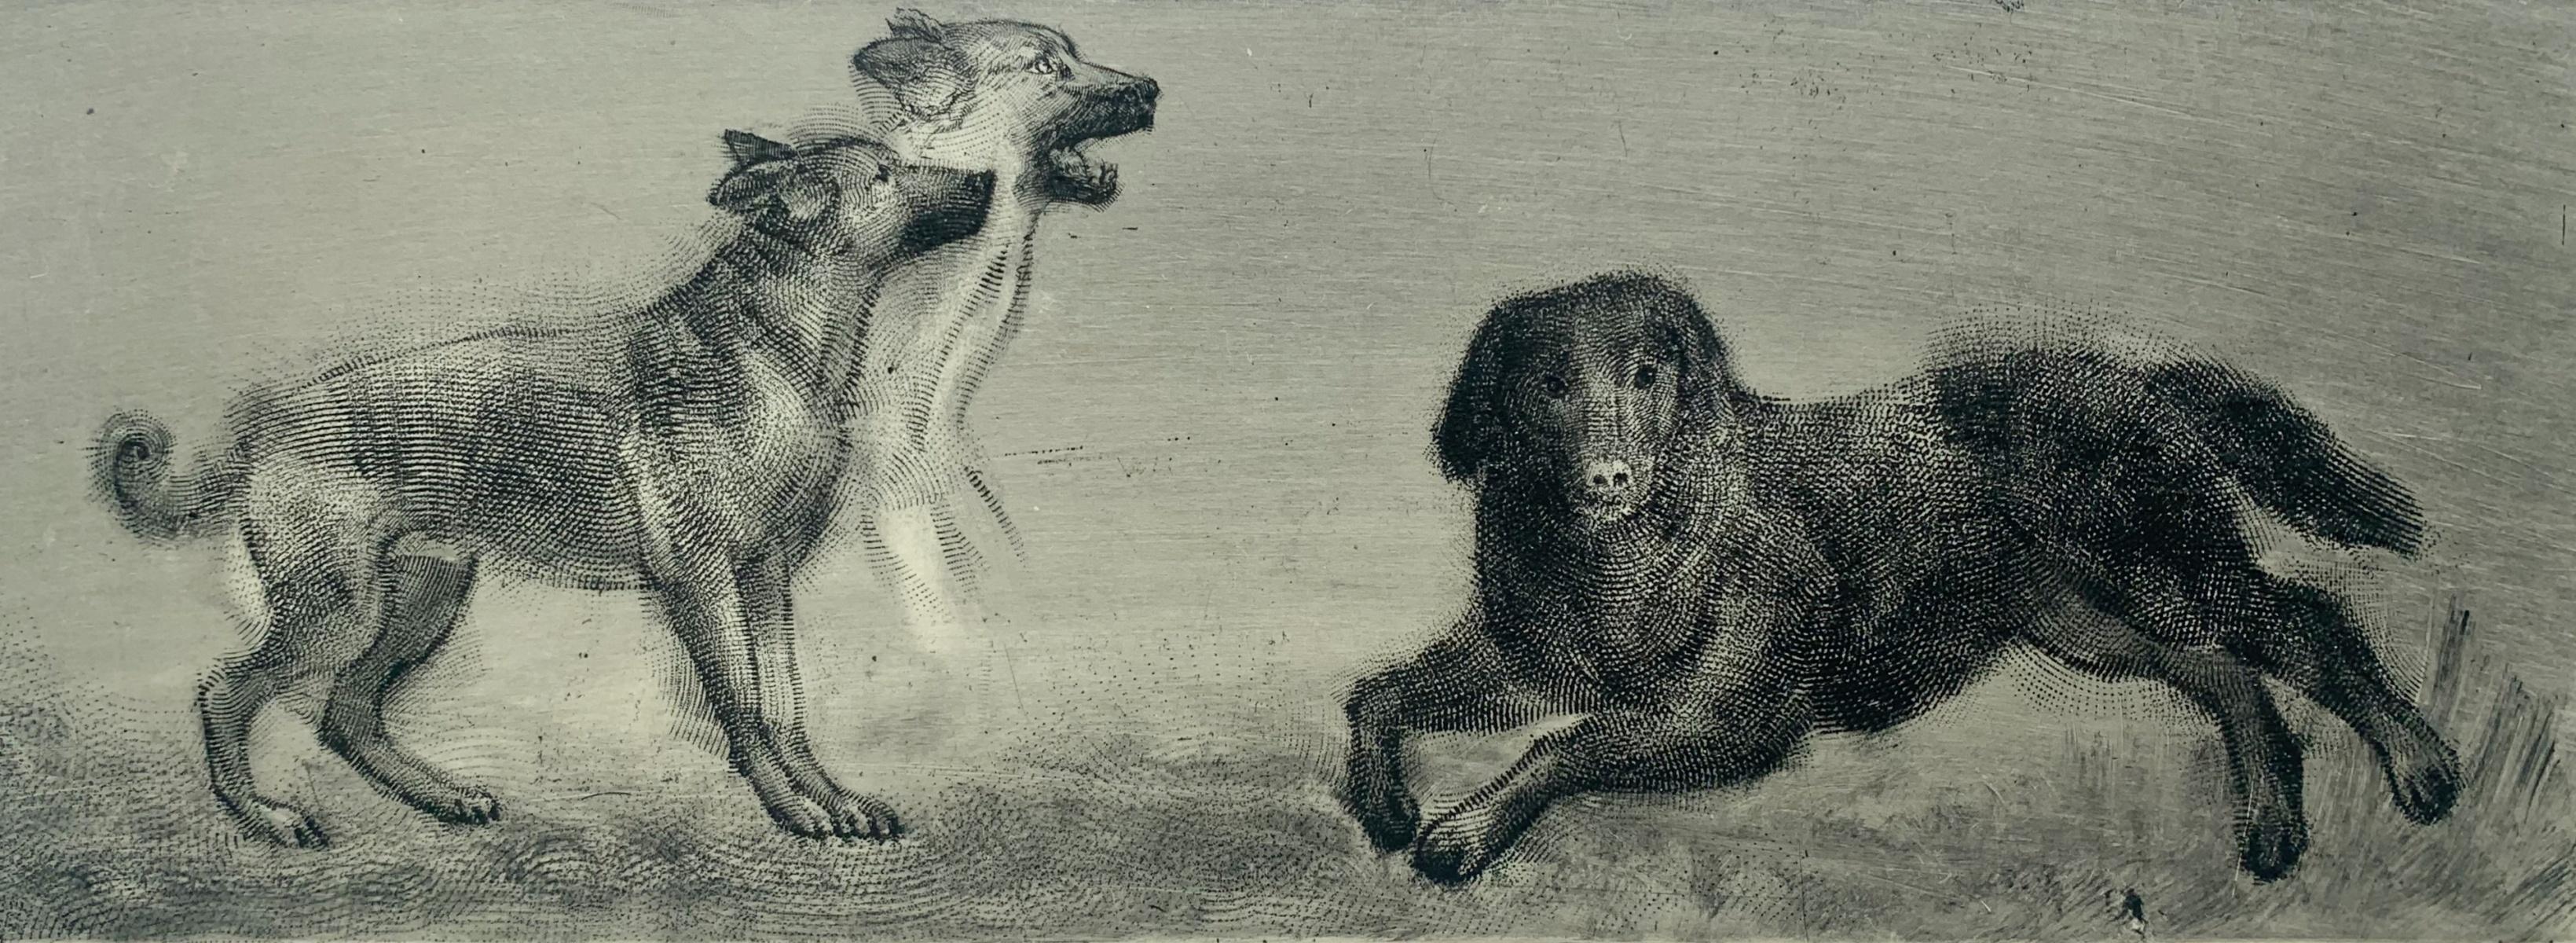 Pawel Zablocki Animal Print - Tofcia and Turbo. Contemporary Figurative Etching Print, Animals, Dogs